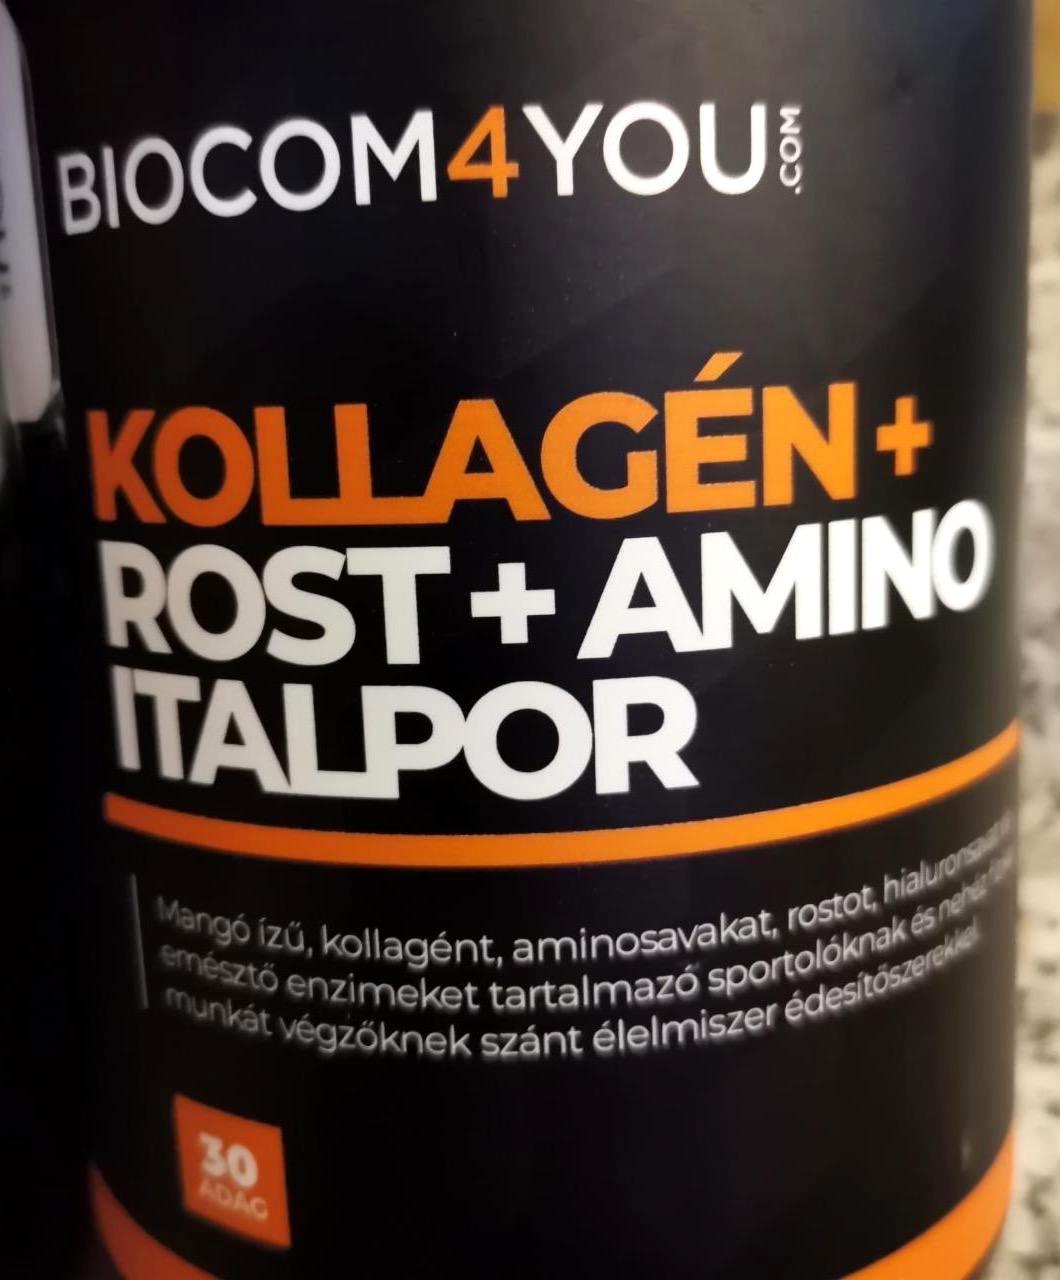 Képek - Kollagén+rost+amino italpor Biocom4you